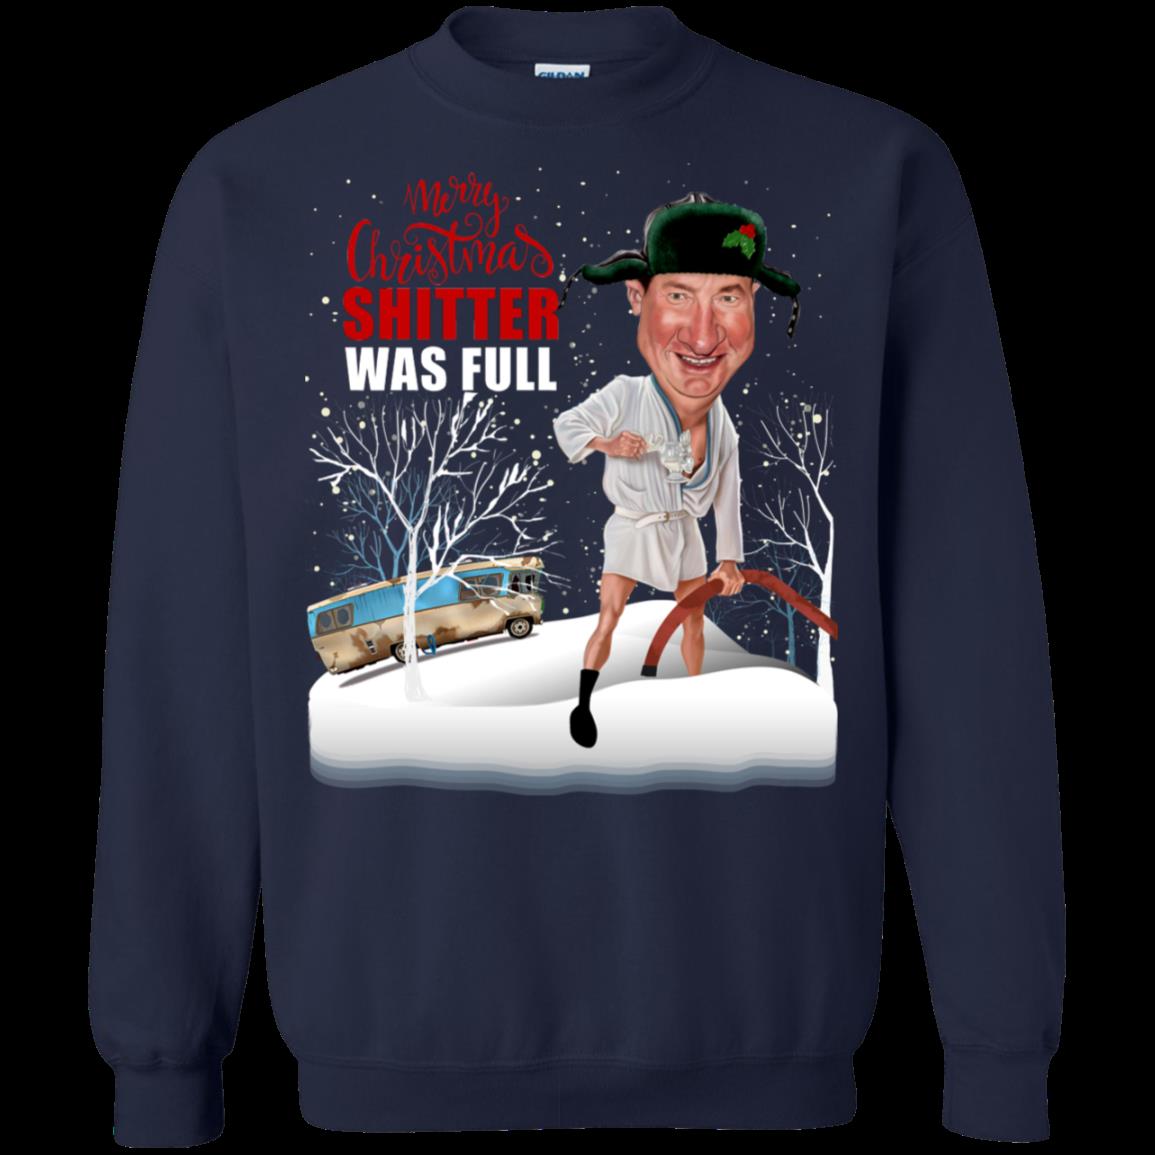 T Shirts Hoodies Sweatshirts Merry Christmas Shitter Was Full National Lampoons Christmas Vacation Shirts 1